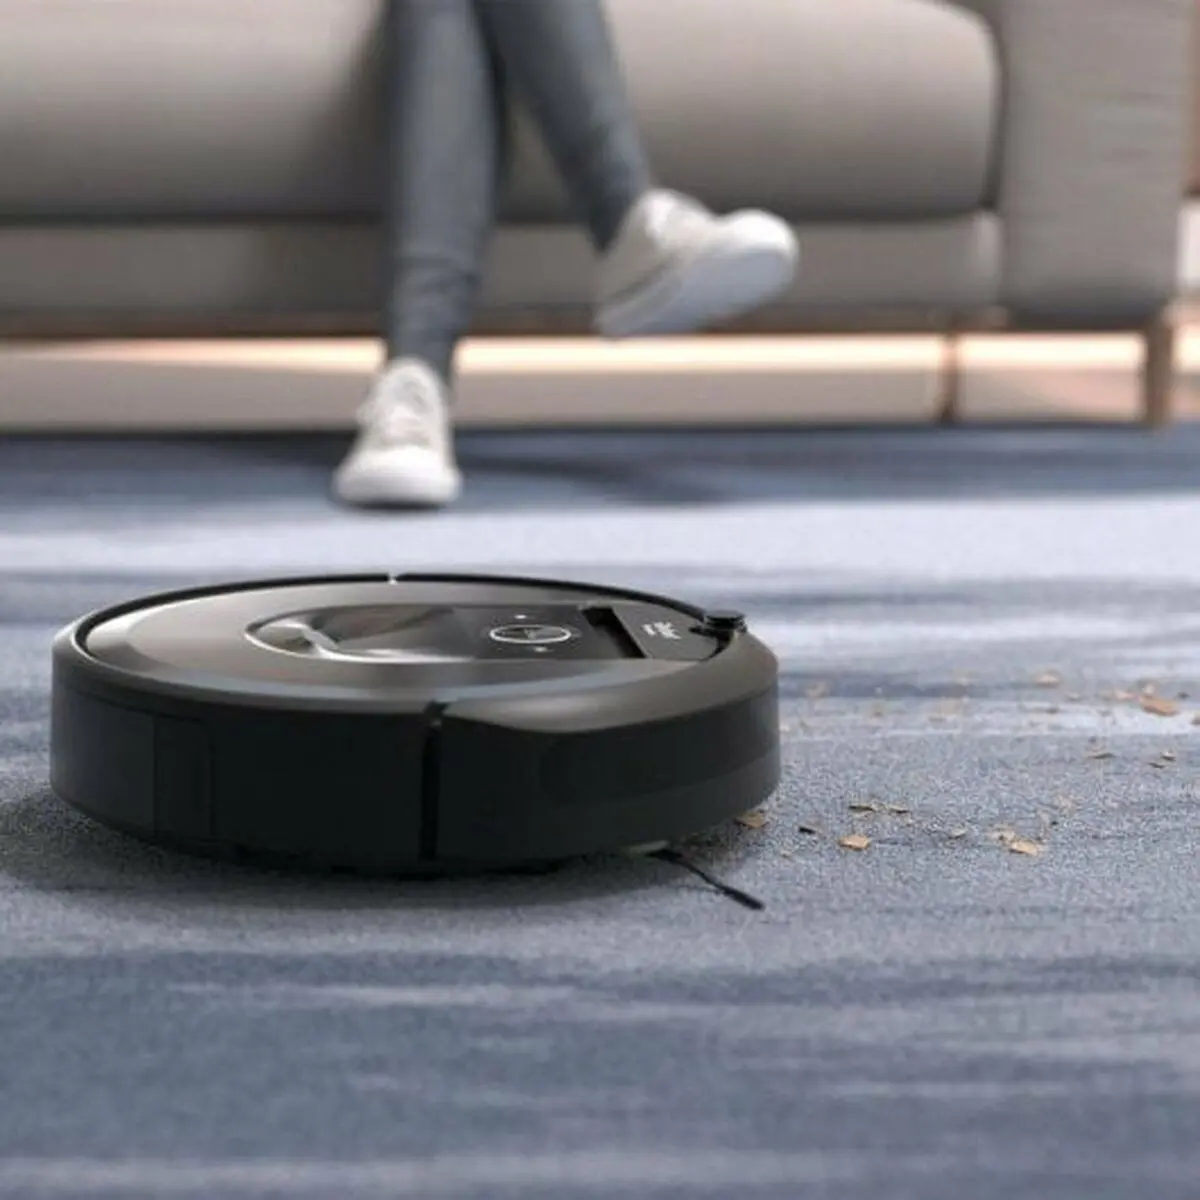 Robot Aspirapolvere iRobot Roomba Combo i8